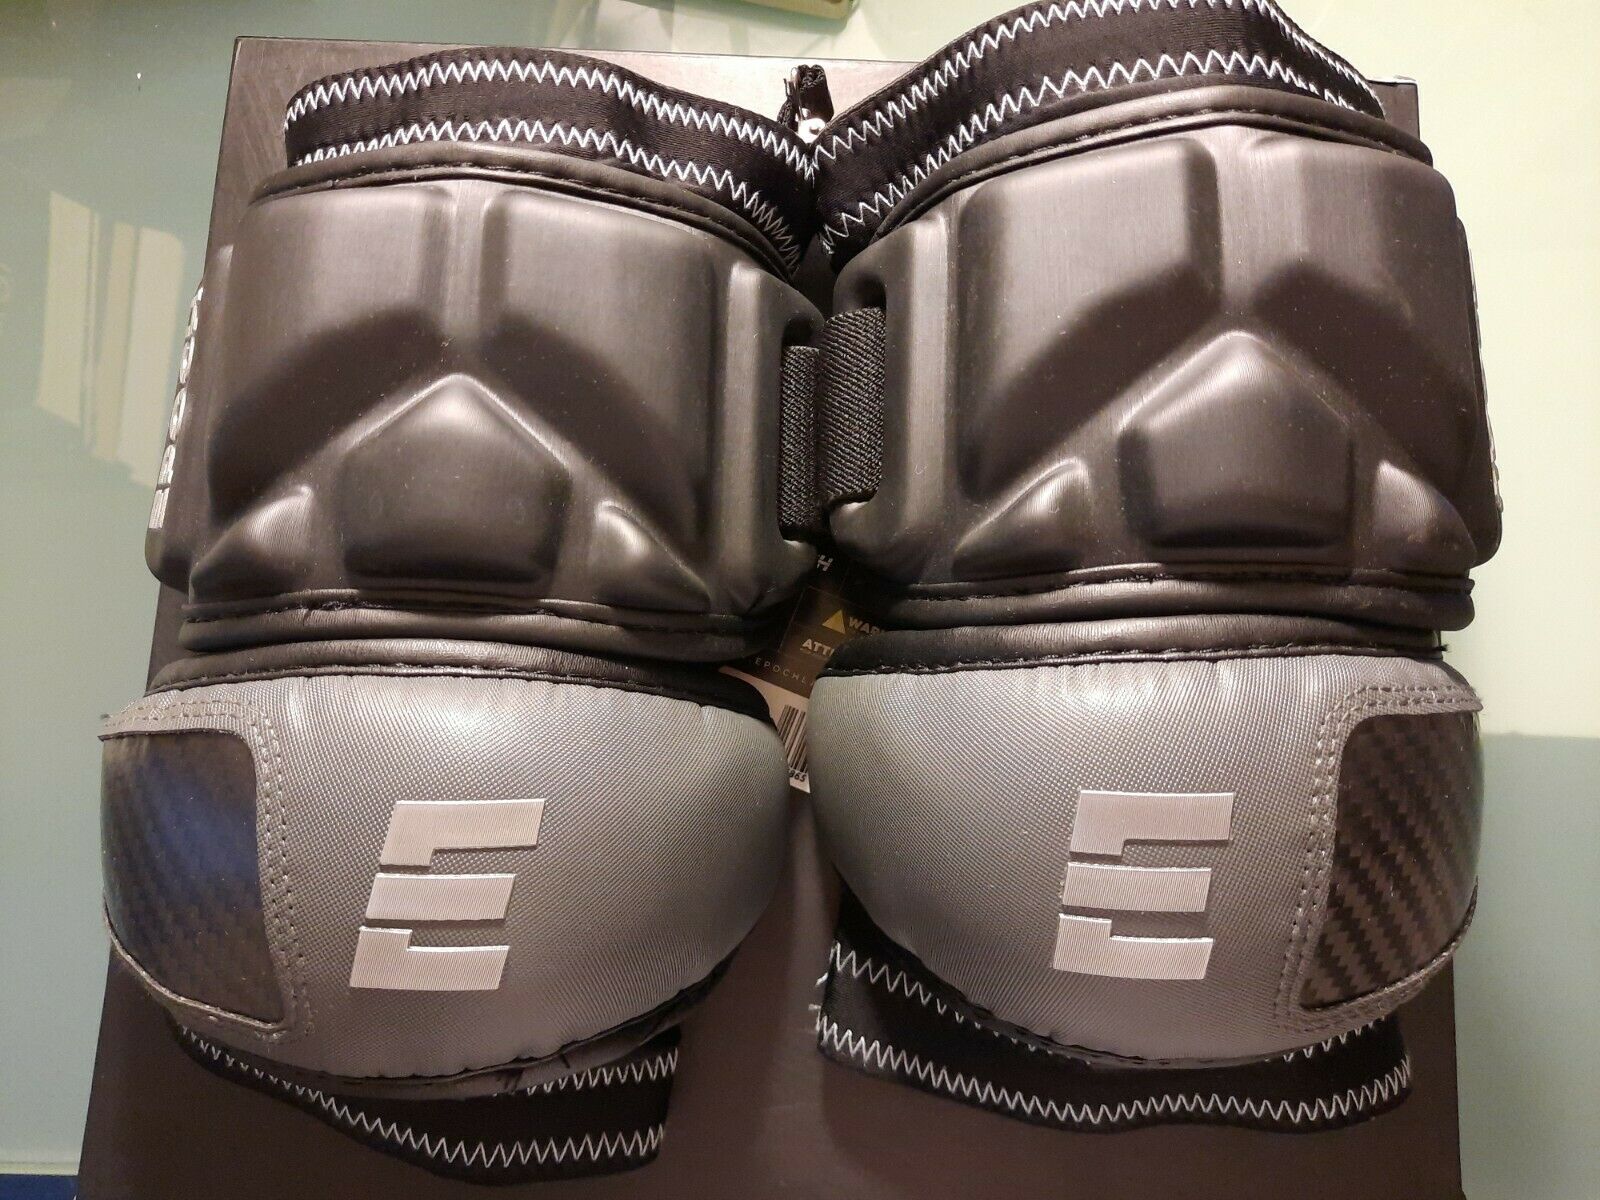 Epoch Lacrosse Integra Elbow Caps High Performance Large Black Noir New!